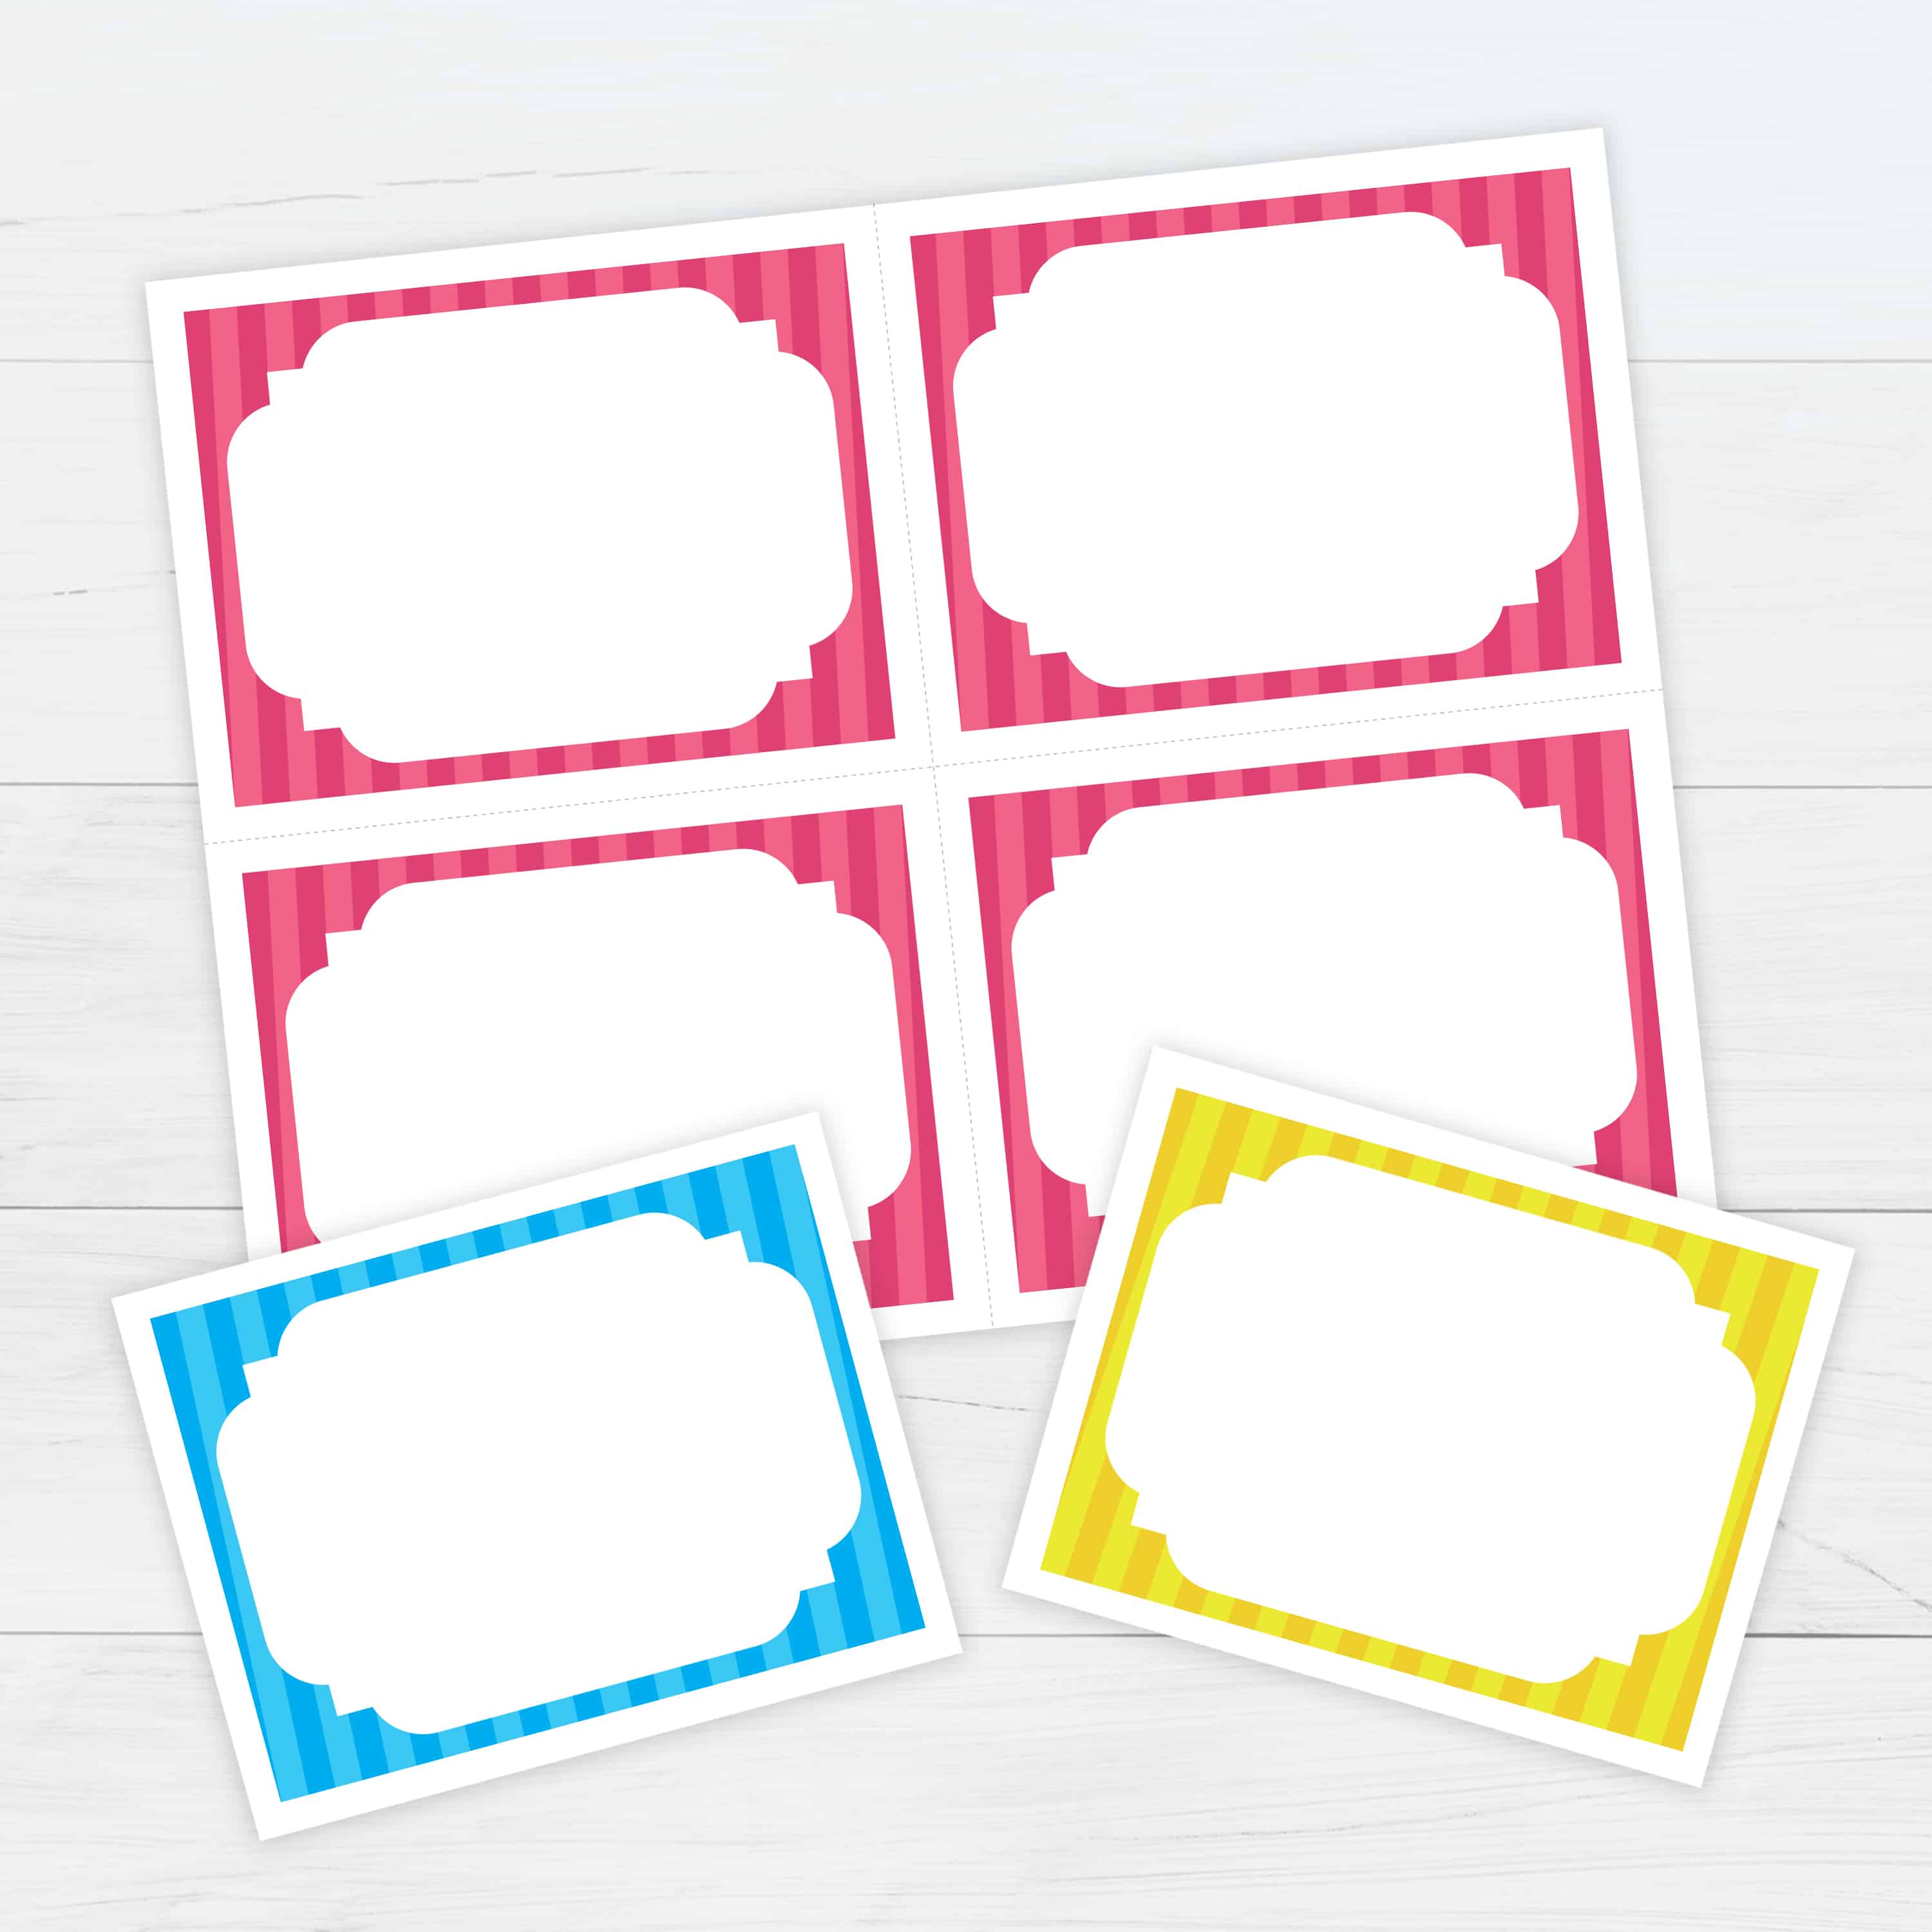 Bordered Flashcards 21 Template - Free Printable Download In Free Printable Flash Cards Template